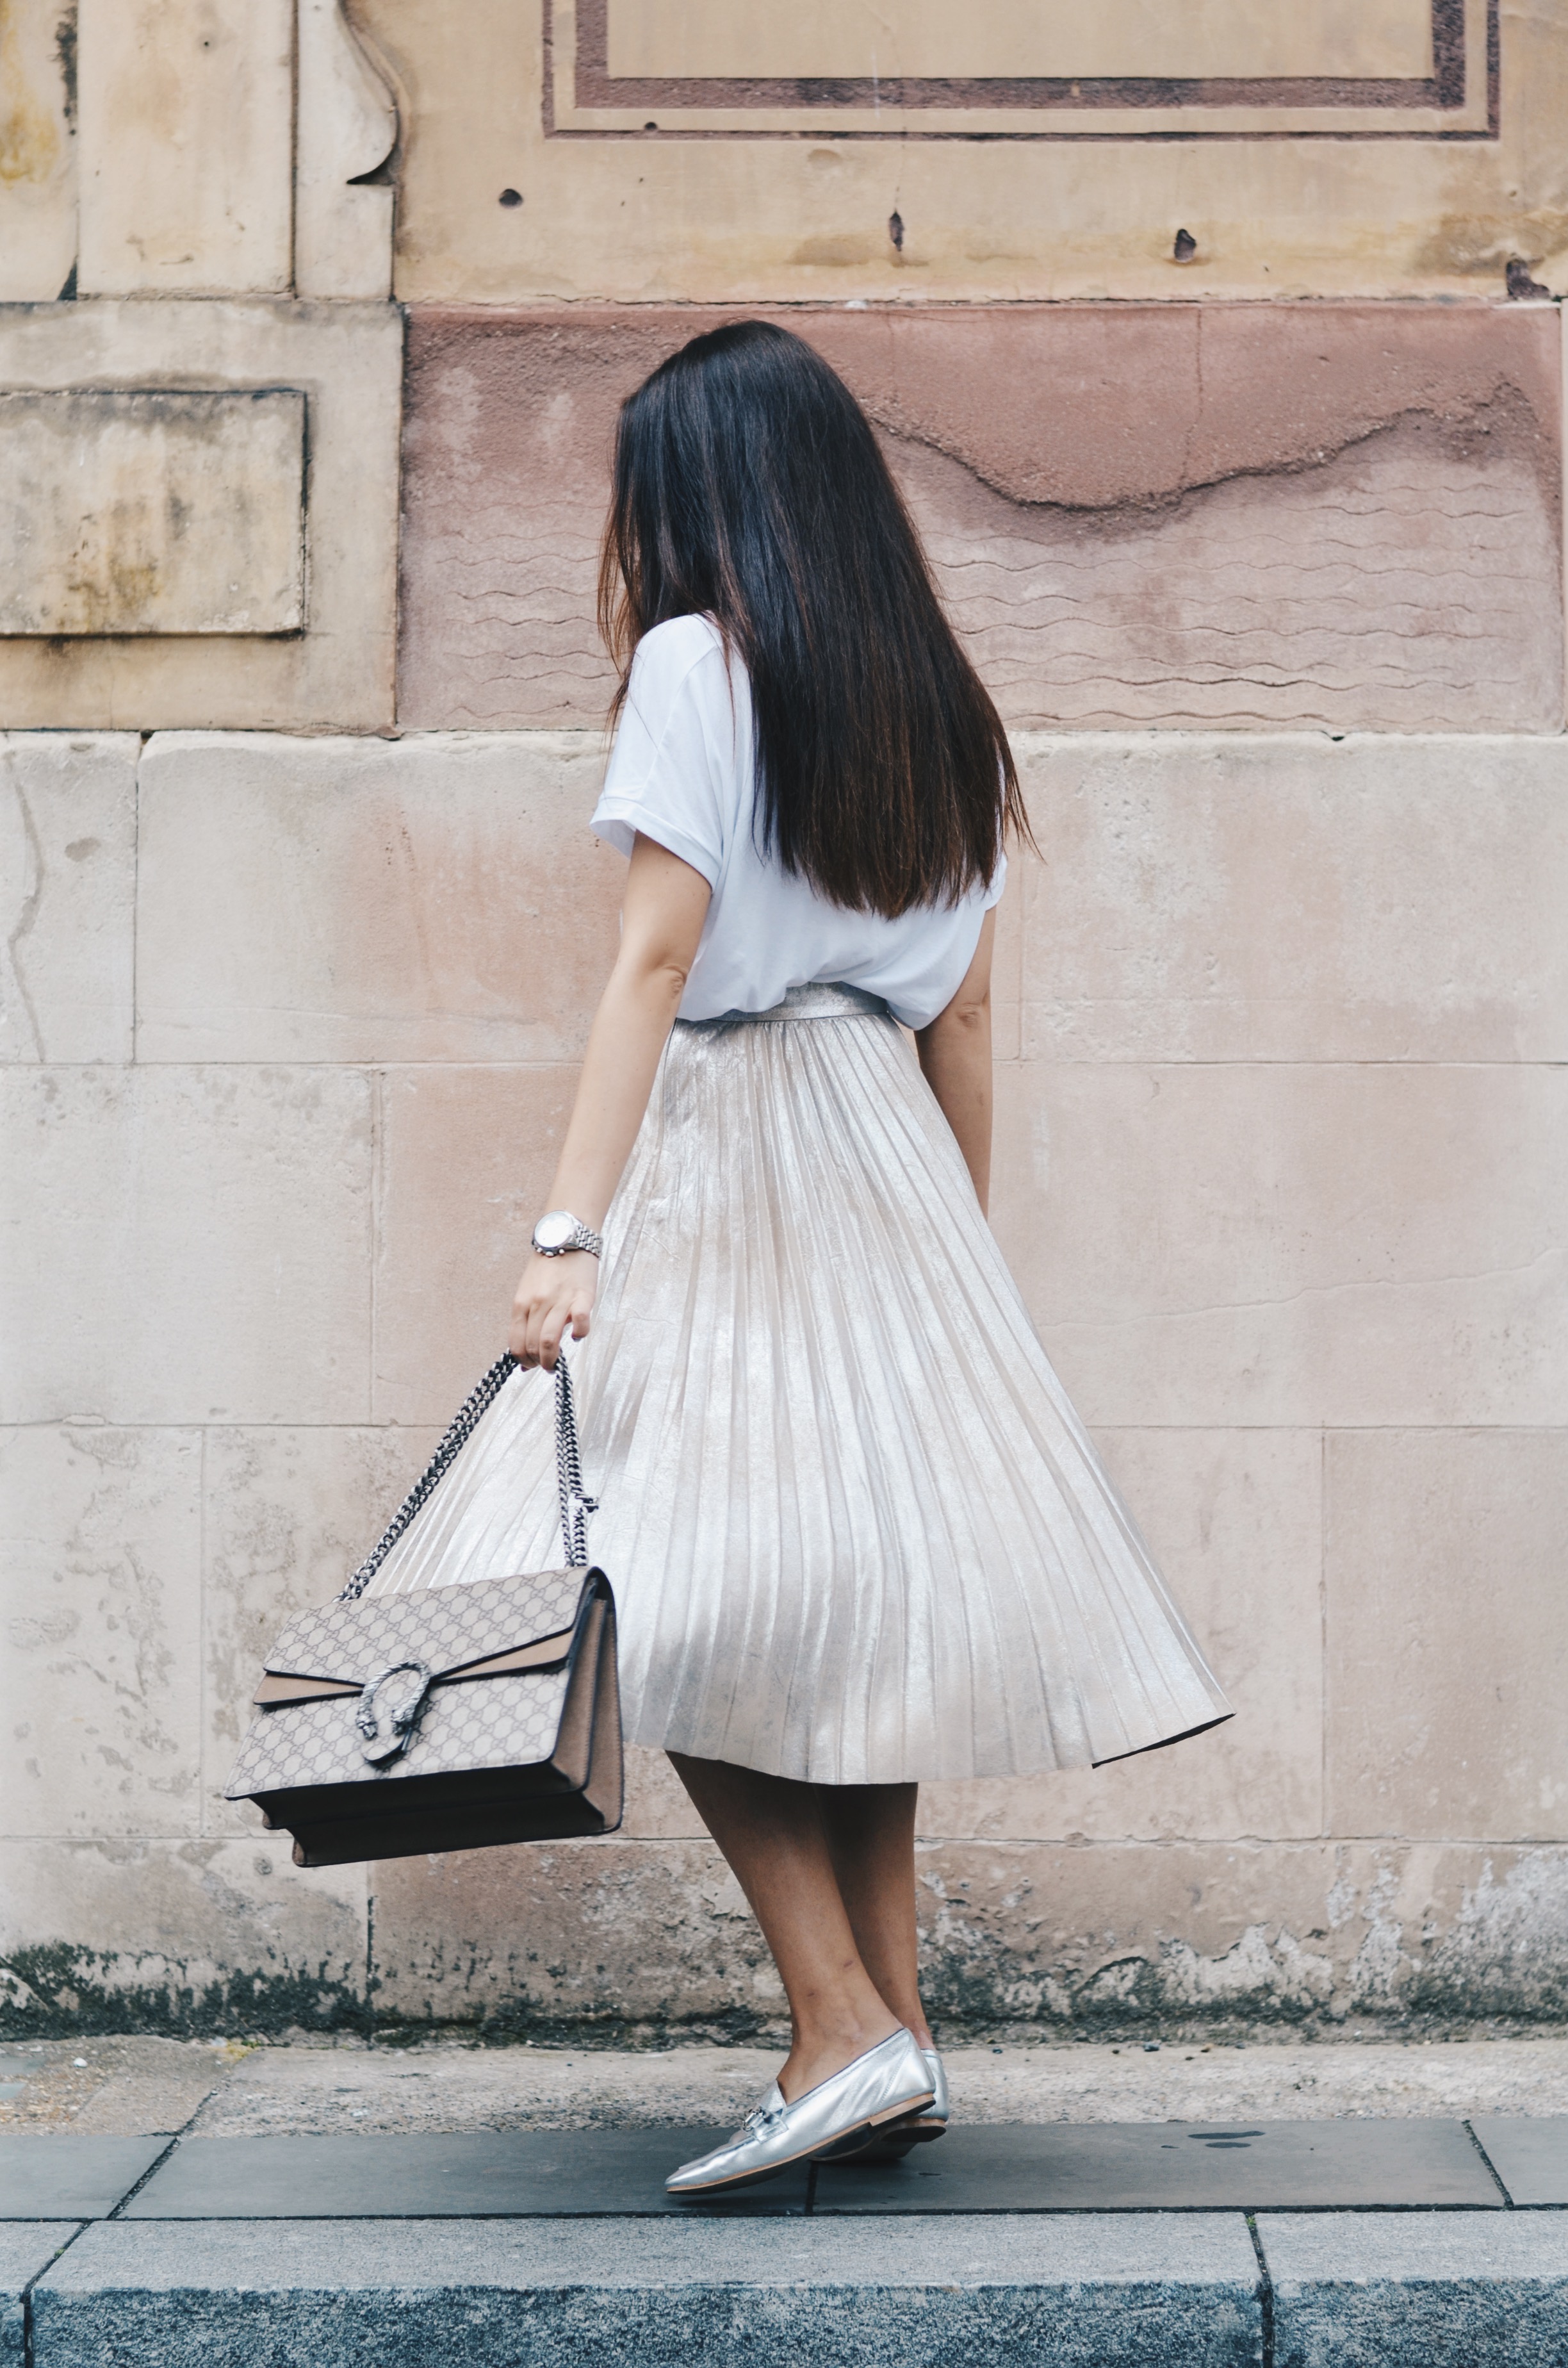 Top: ZARA | Skirt: ZARA | Shoes: Office | Bracelet: Tiffany & Co | Watch: Thomas Sabo | Bag: Gucci